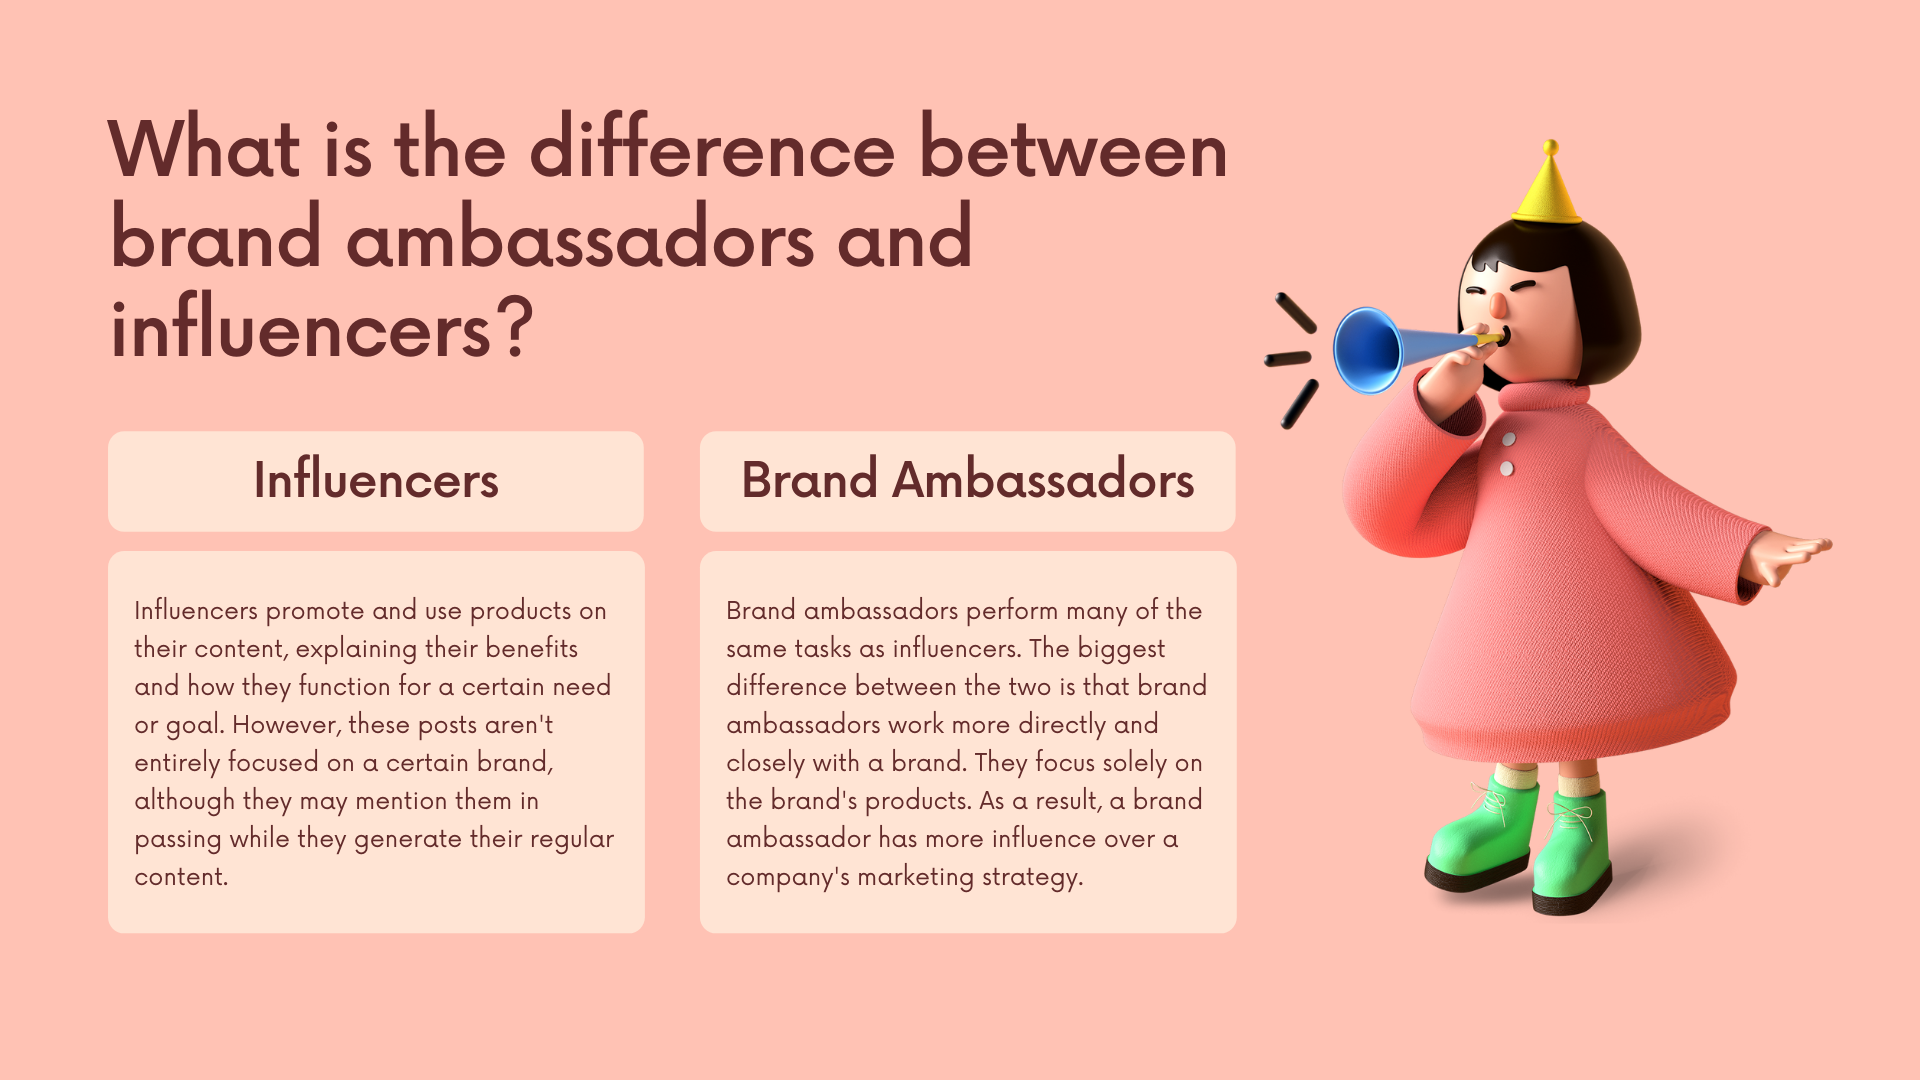 Brand Ambassador: Definition, Job Description, Salary, & More